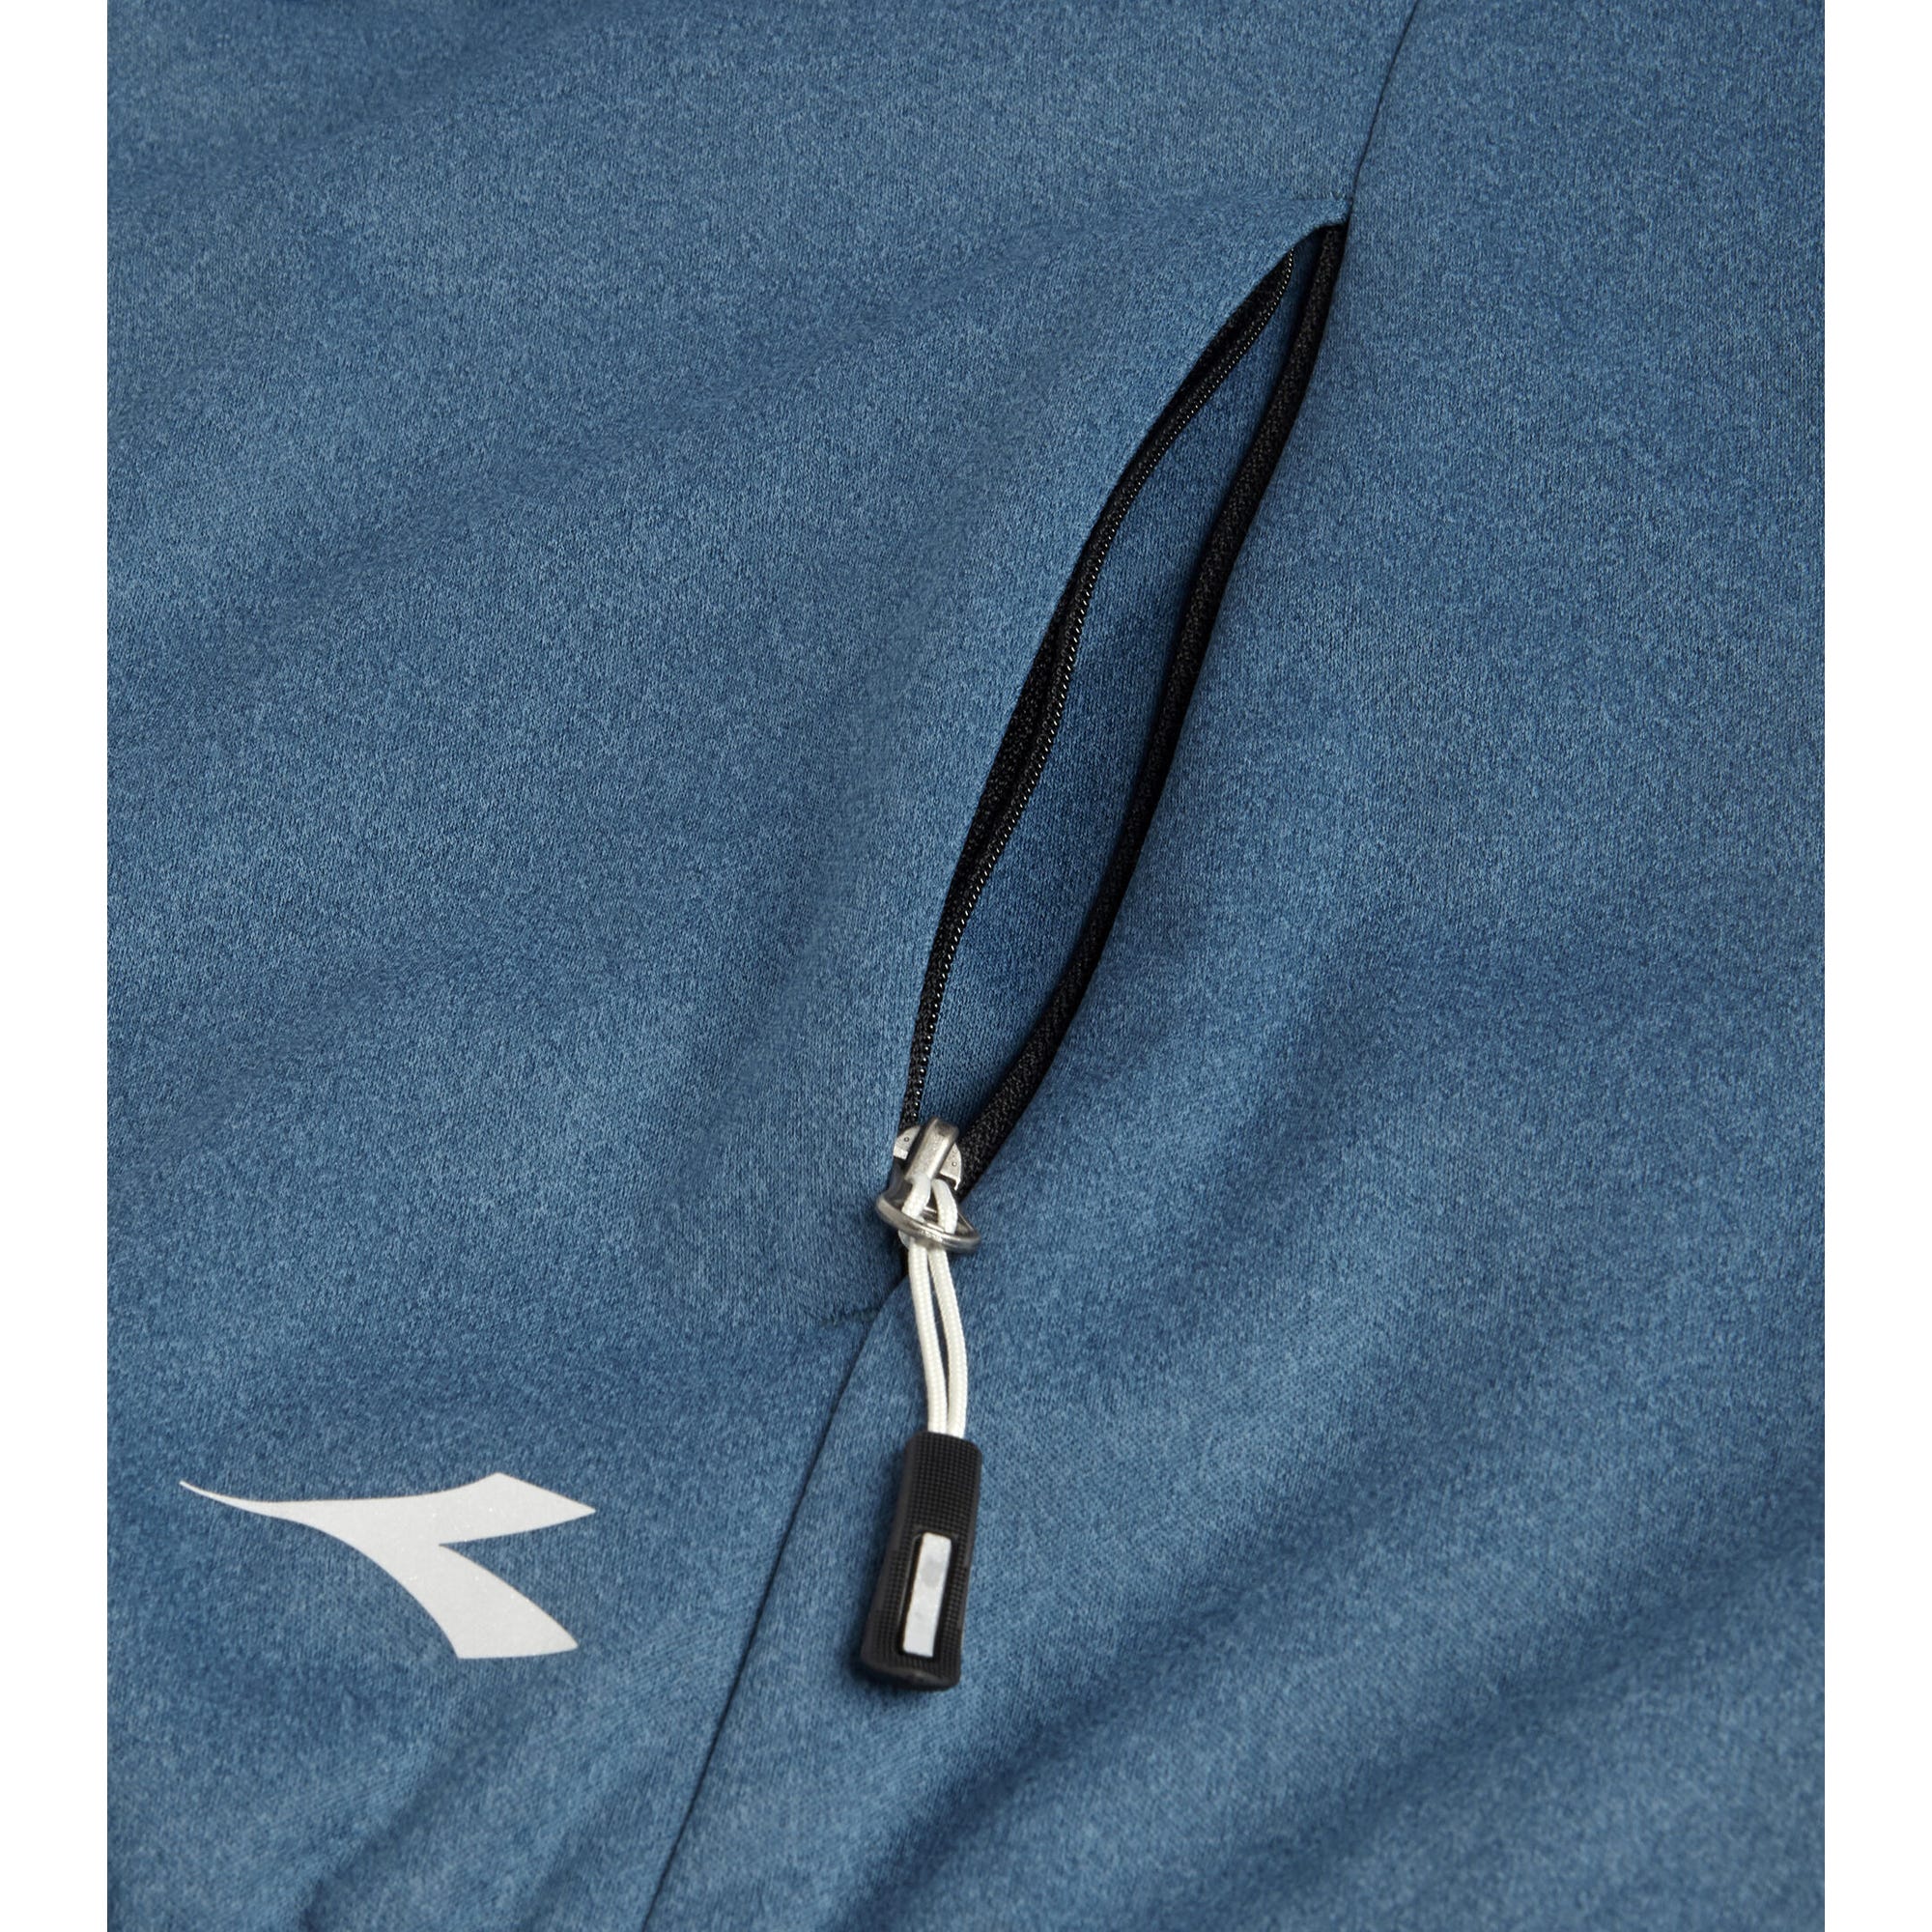 Veste softshell enduite Cross bleu - Diadora - Taille S 4